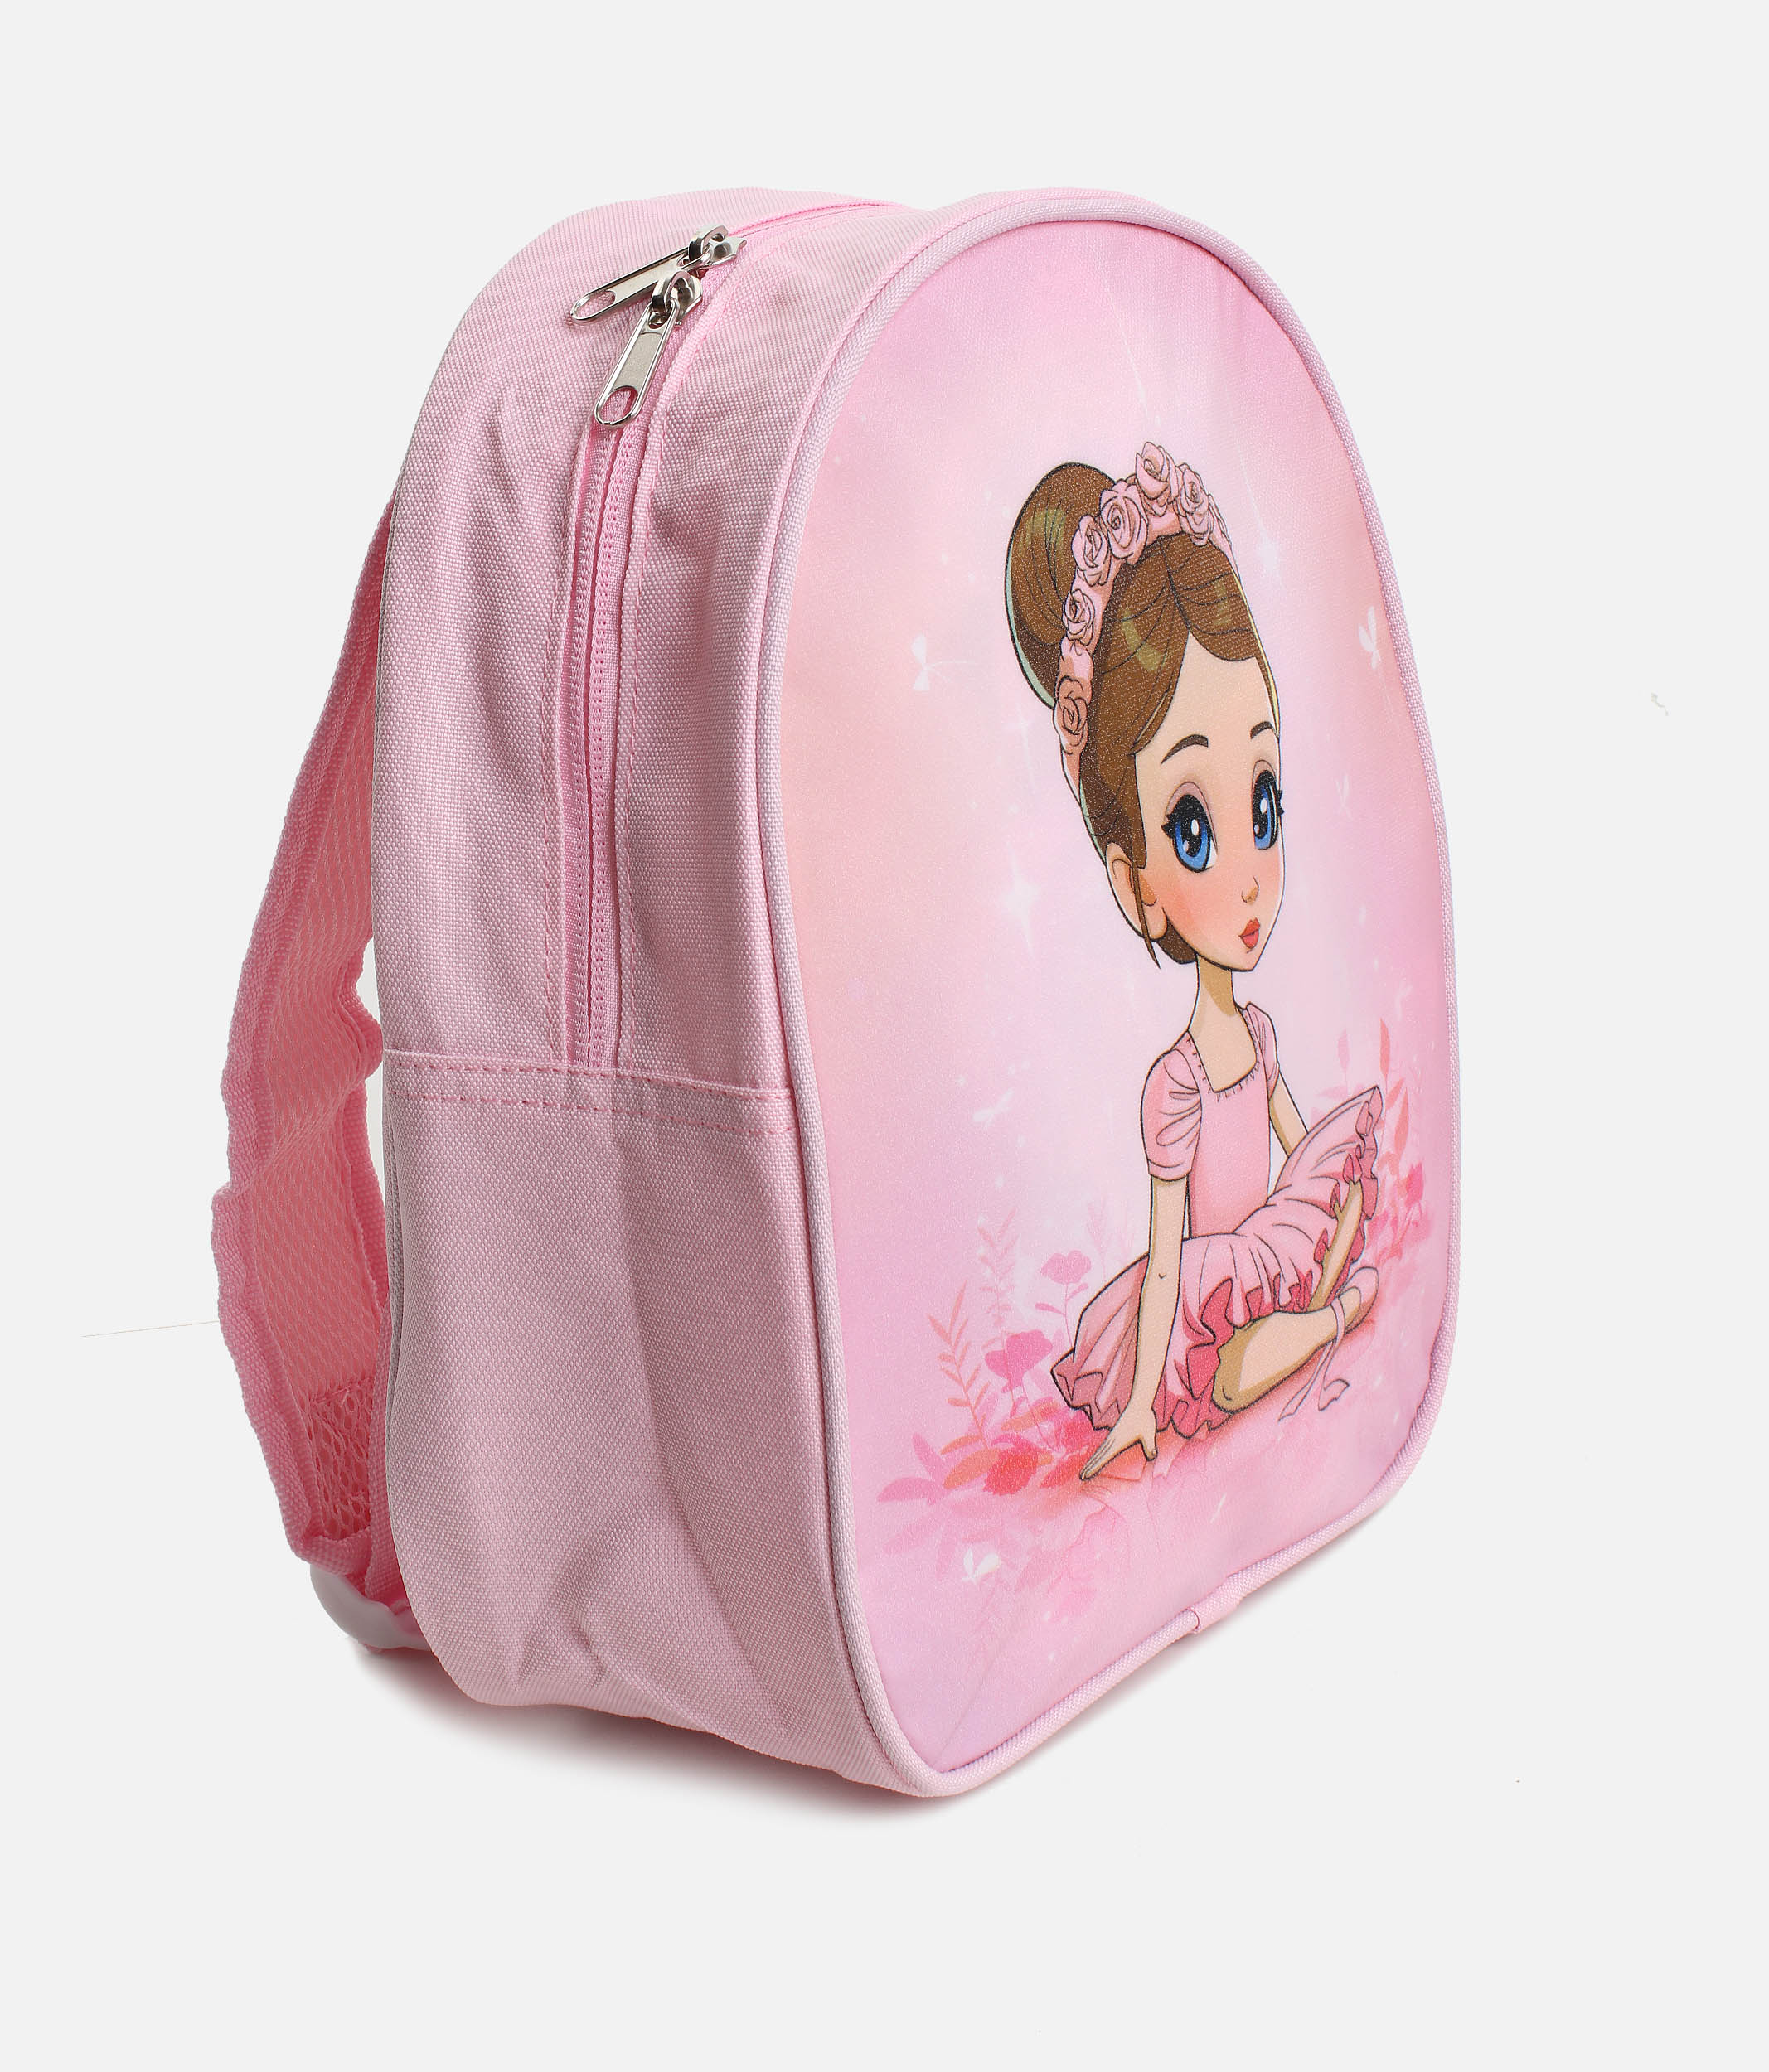 TENDYCOCO Ballet Bag Dance Bag Ballerina Duffel Bag Tutu Dress Bag Pink for  Girls Kids : Amazon.ca: Clothing, Shoes & Accessories